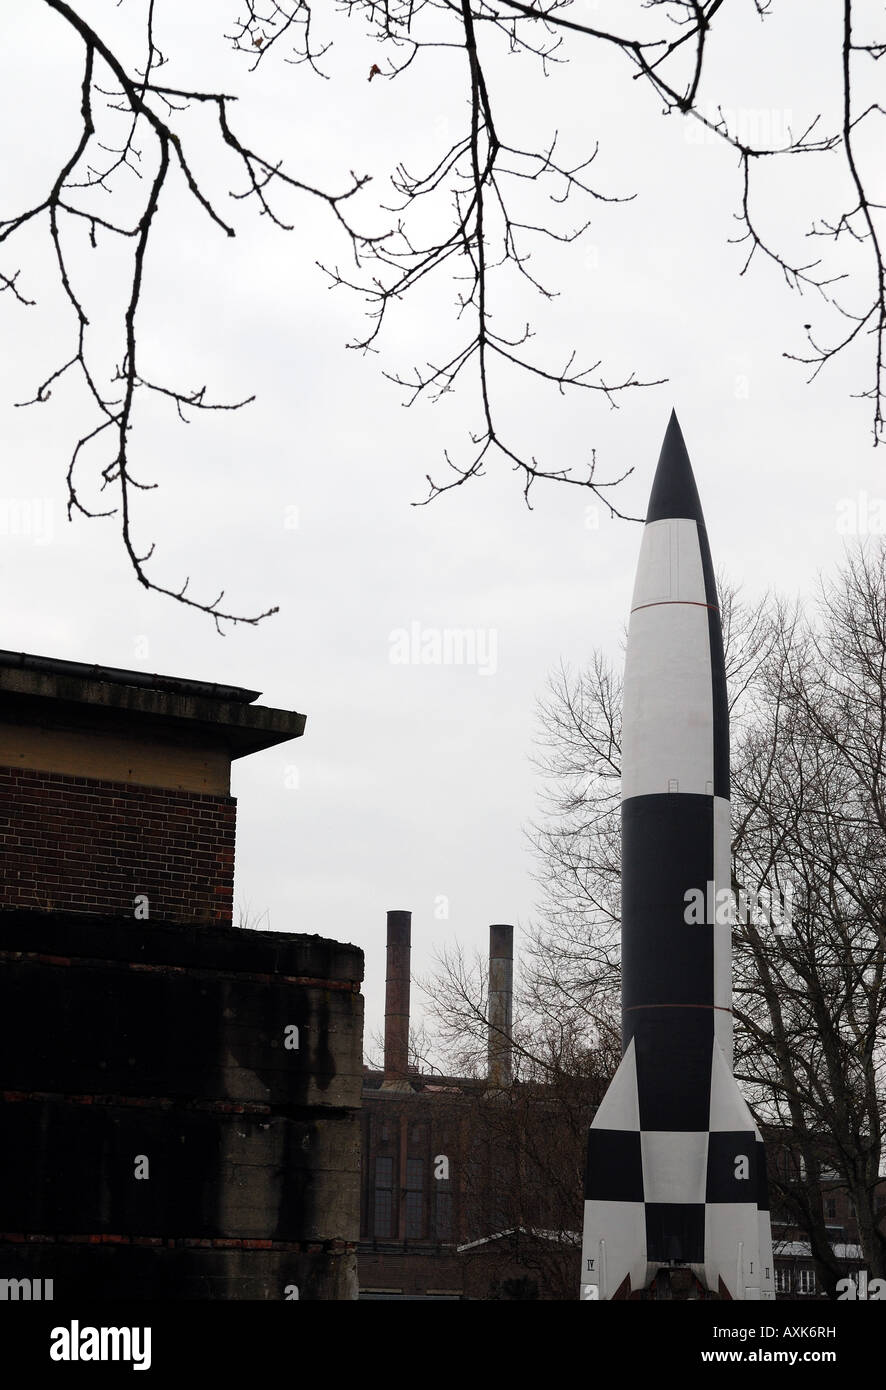 Prototype of V2 rocket on display Peenemuende World War Two Nazi rocket technology research site Stock Photo